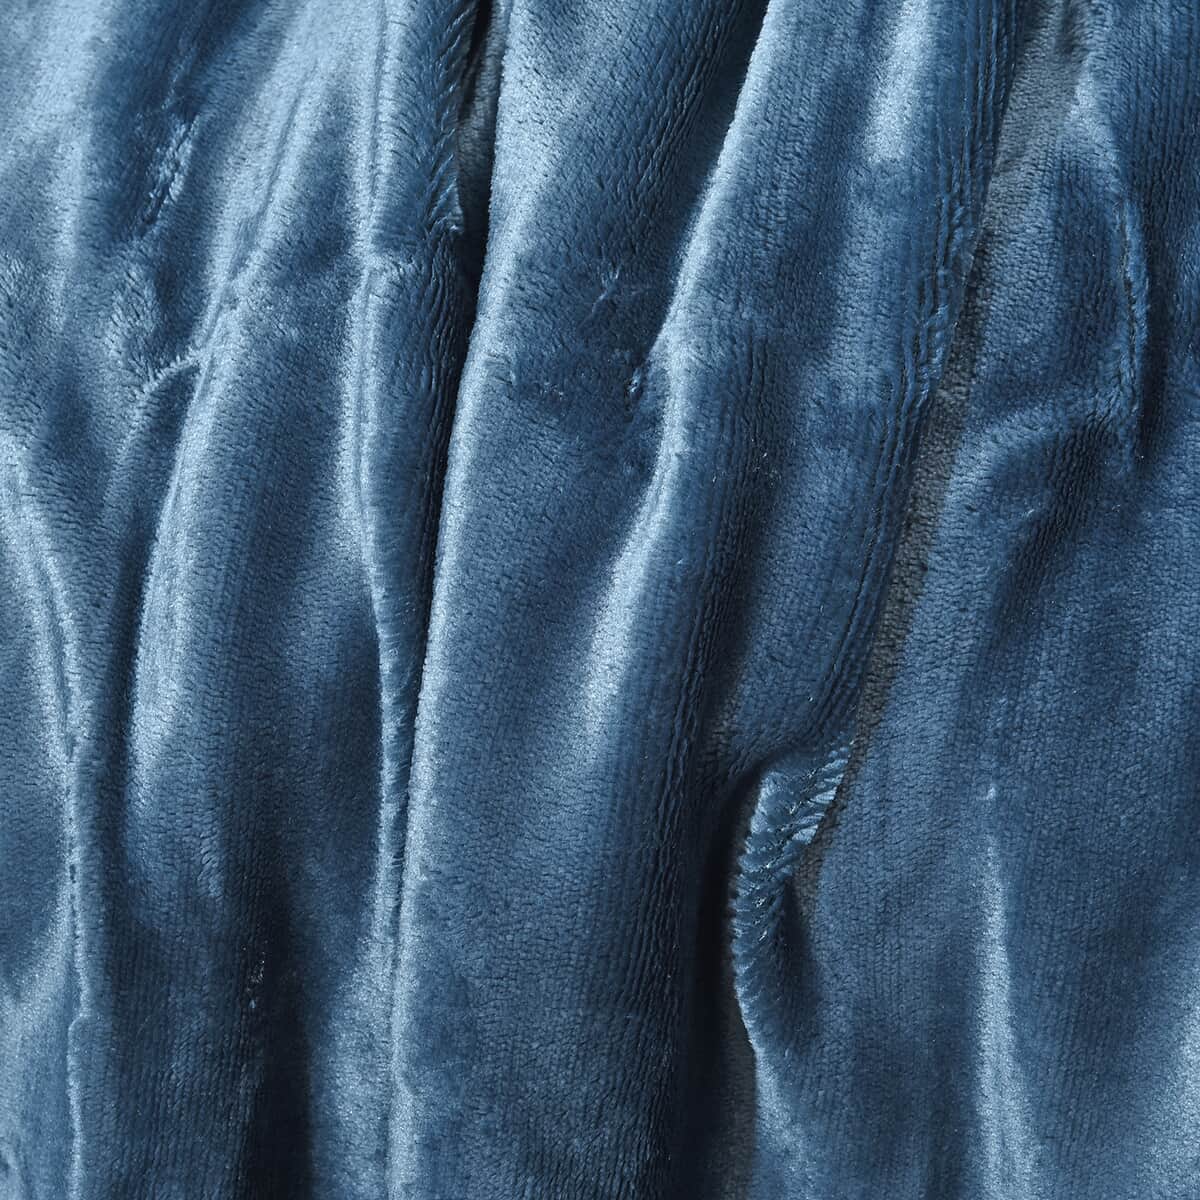 HOMESMART Teal Plush Flannel & Sherpa Reversible Blanket image number 3